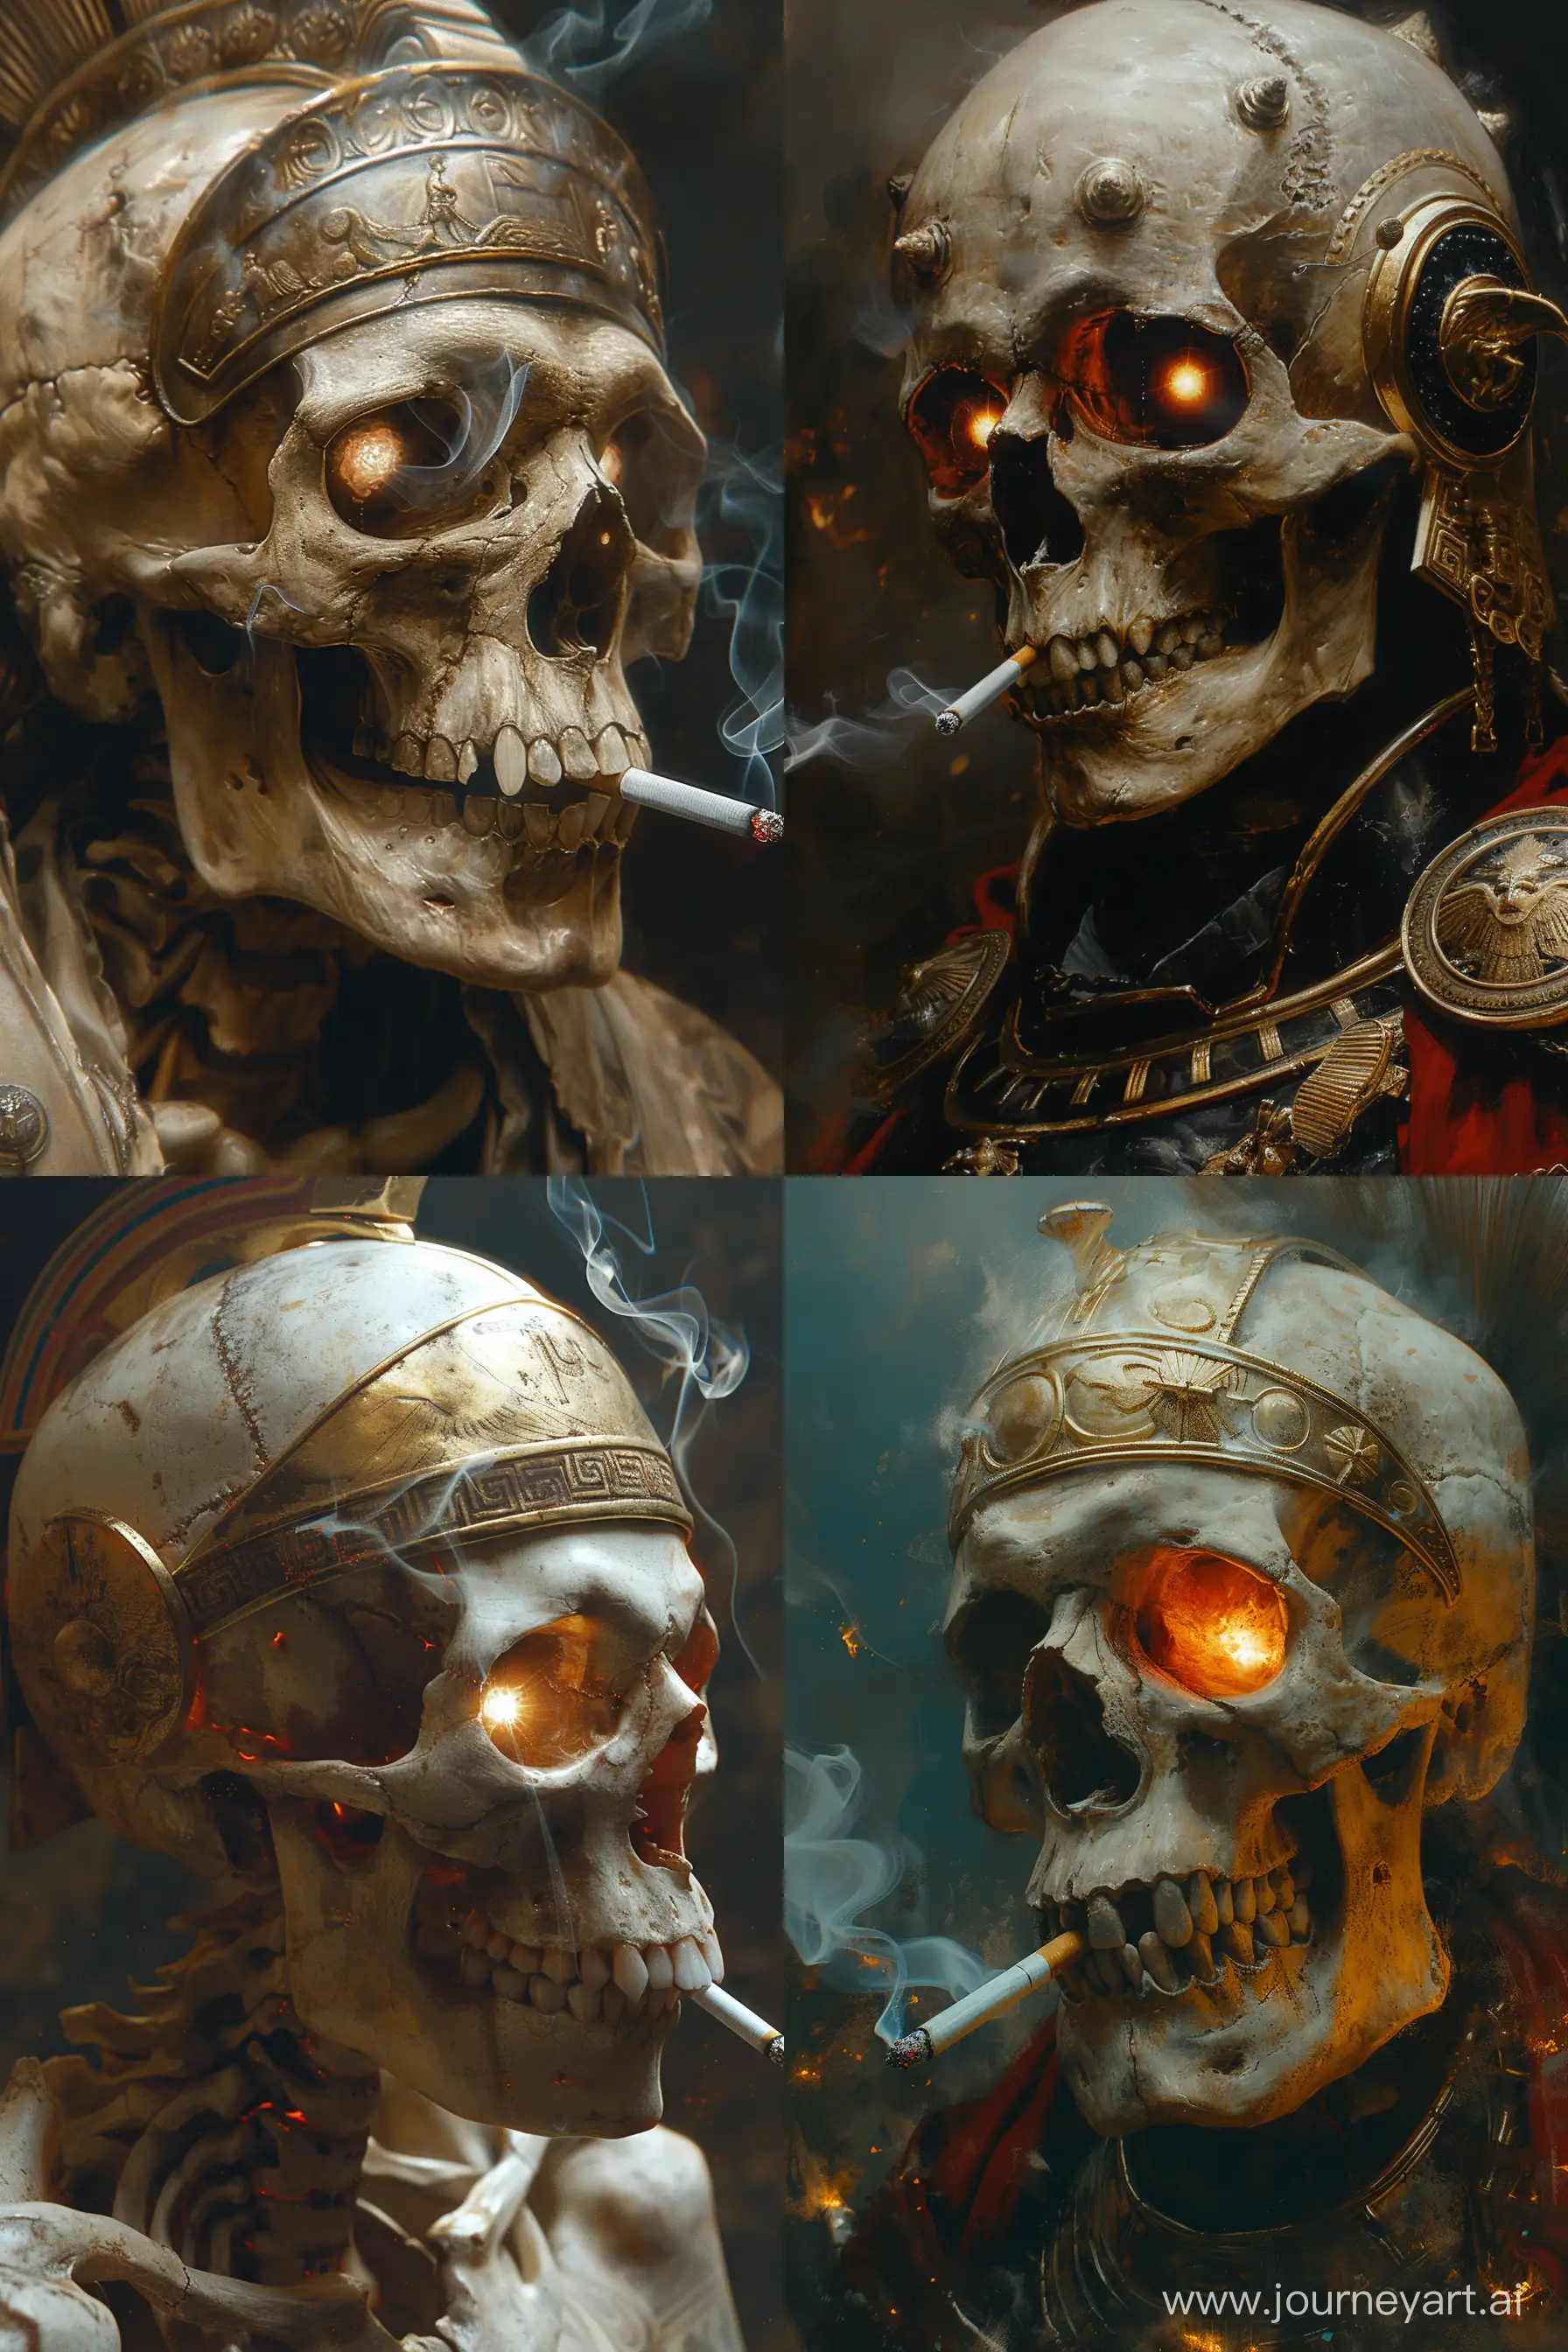 Regal-Skull-Portrait-Ancient-Corinthian-Helmet-Glowing-Eyes-Smoking-Cigarette-by-Alec-Monopoly